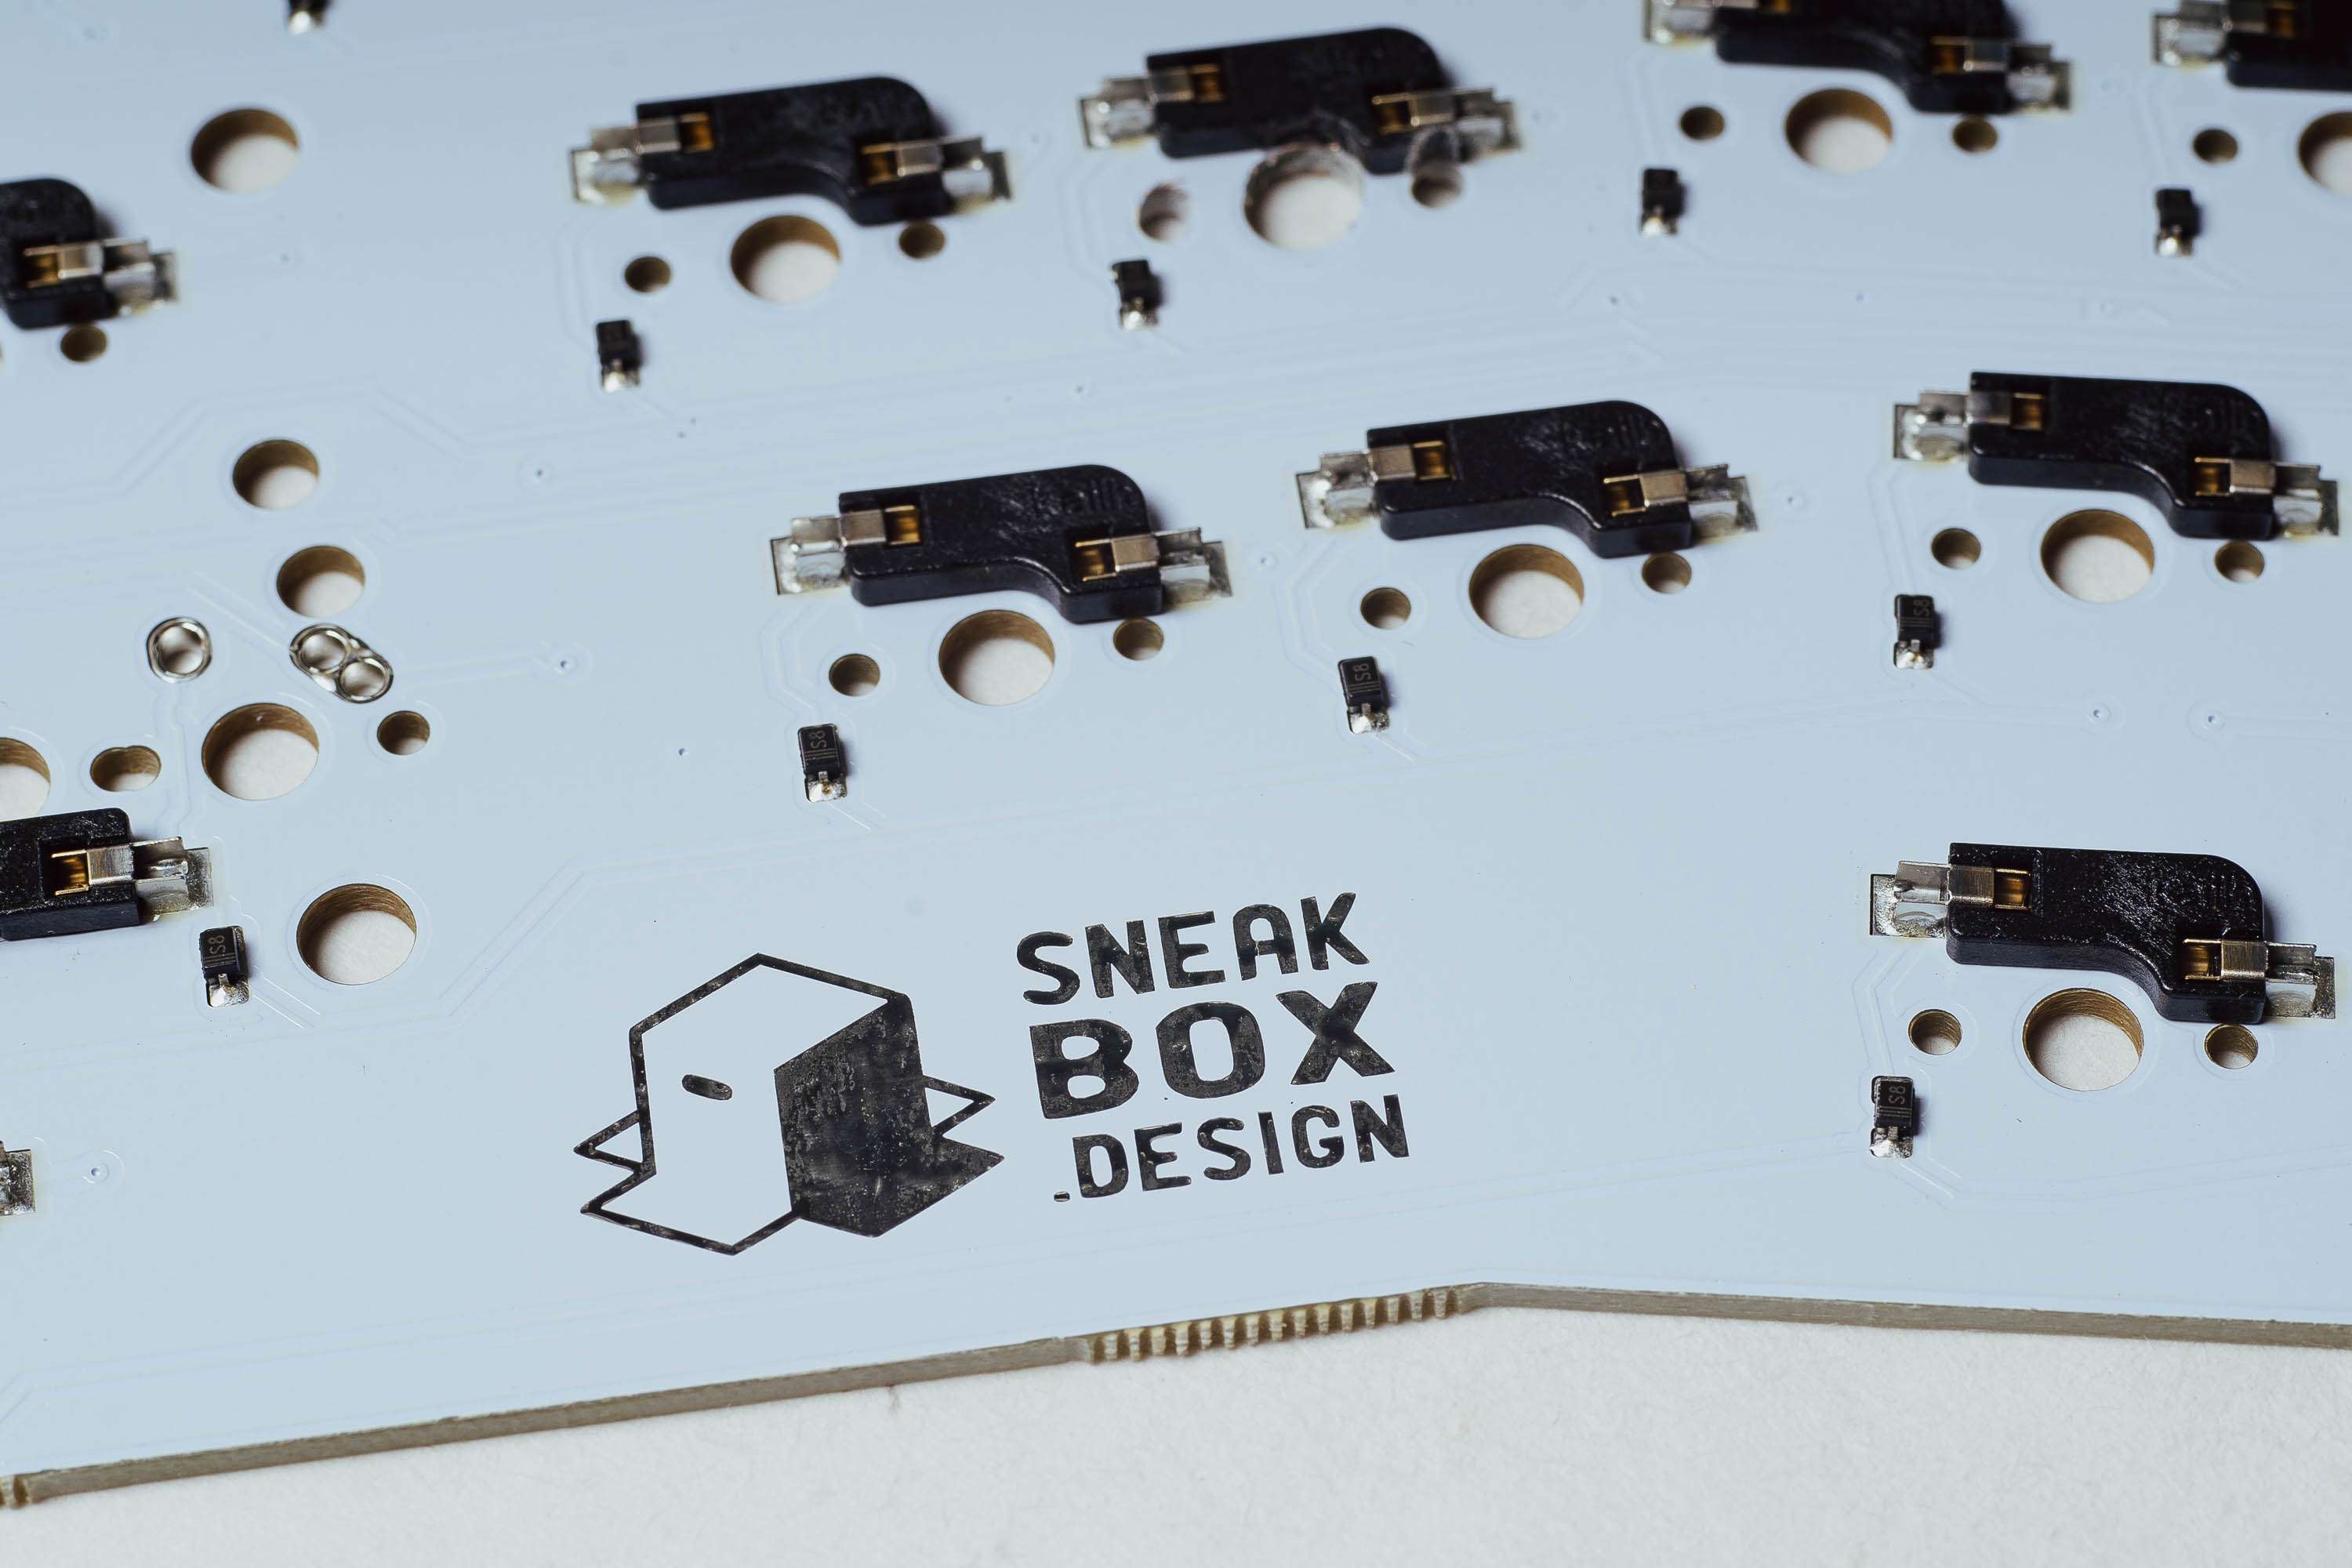 Sneakbox logo on the PCB